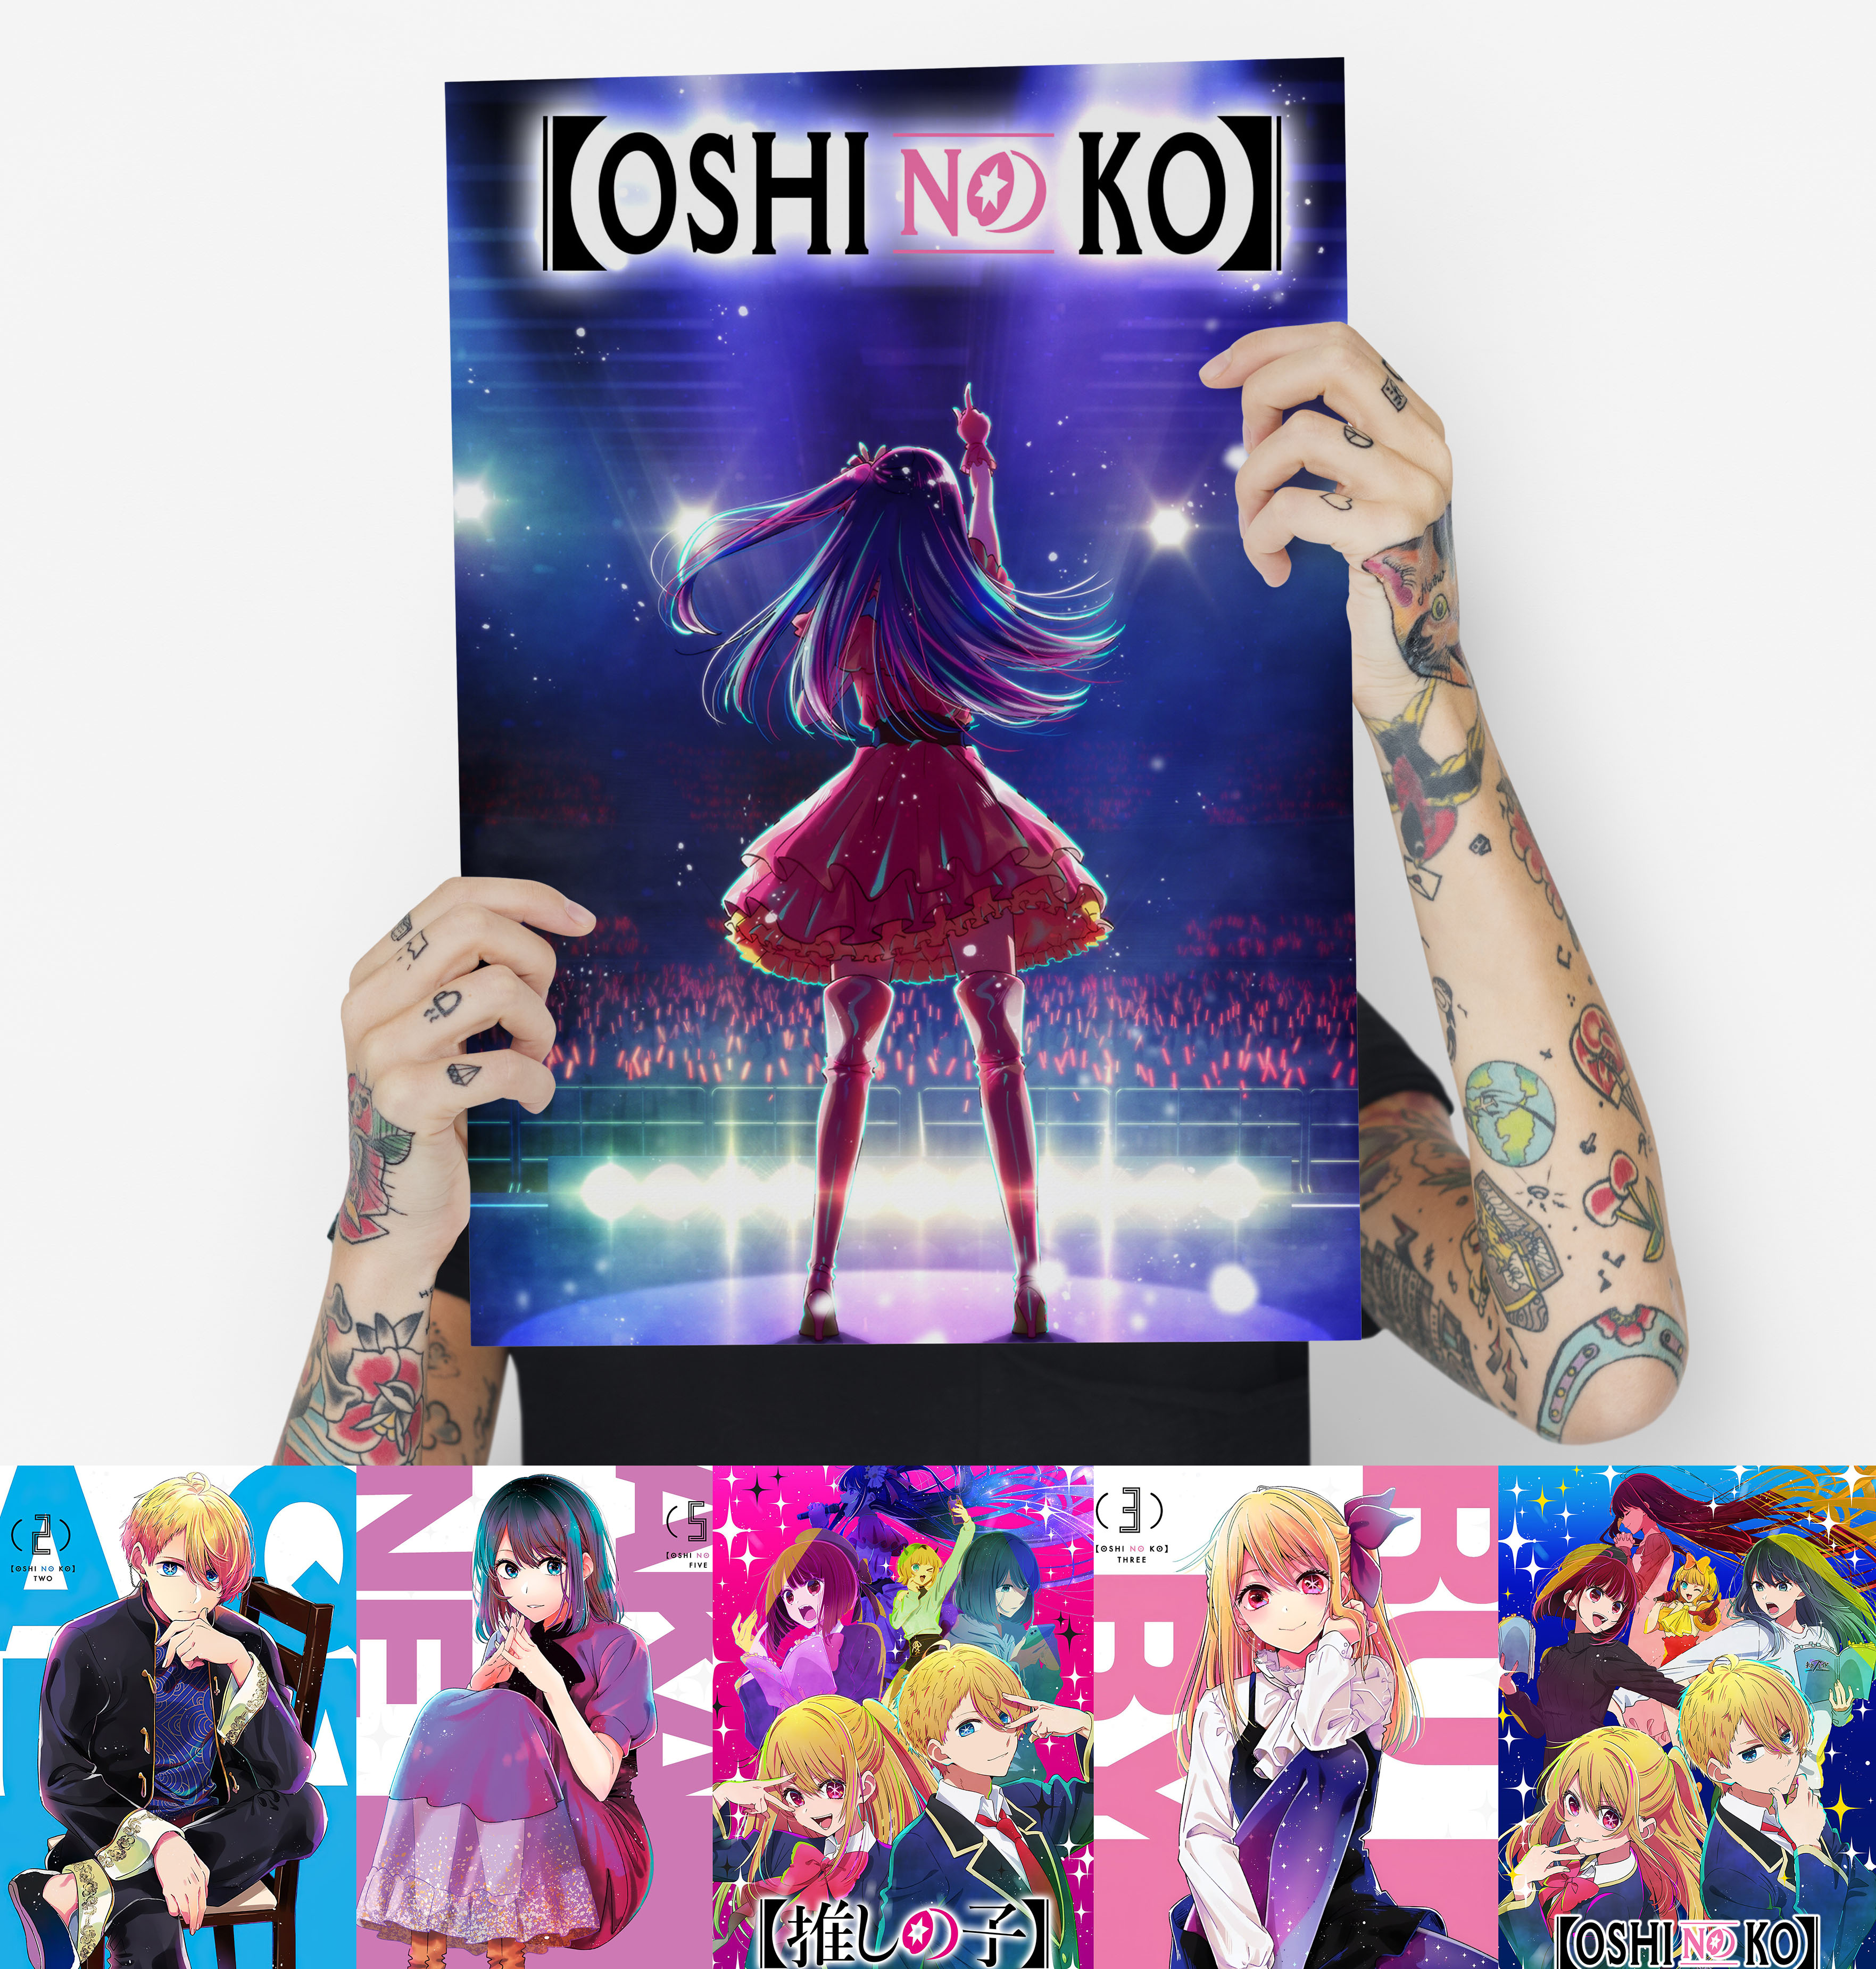 Oshinoko Posters for Sale